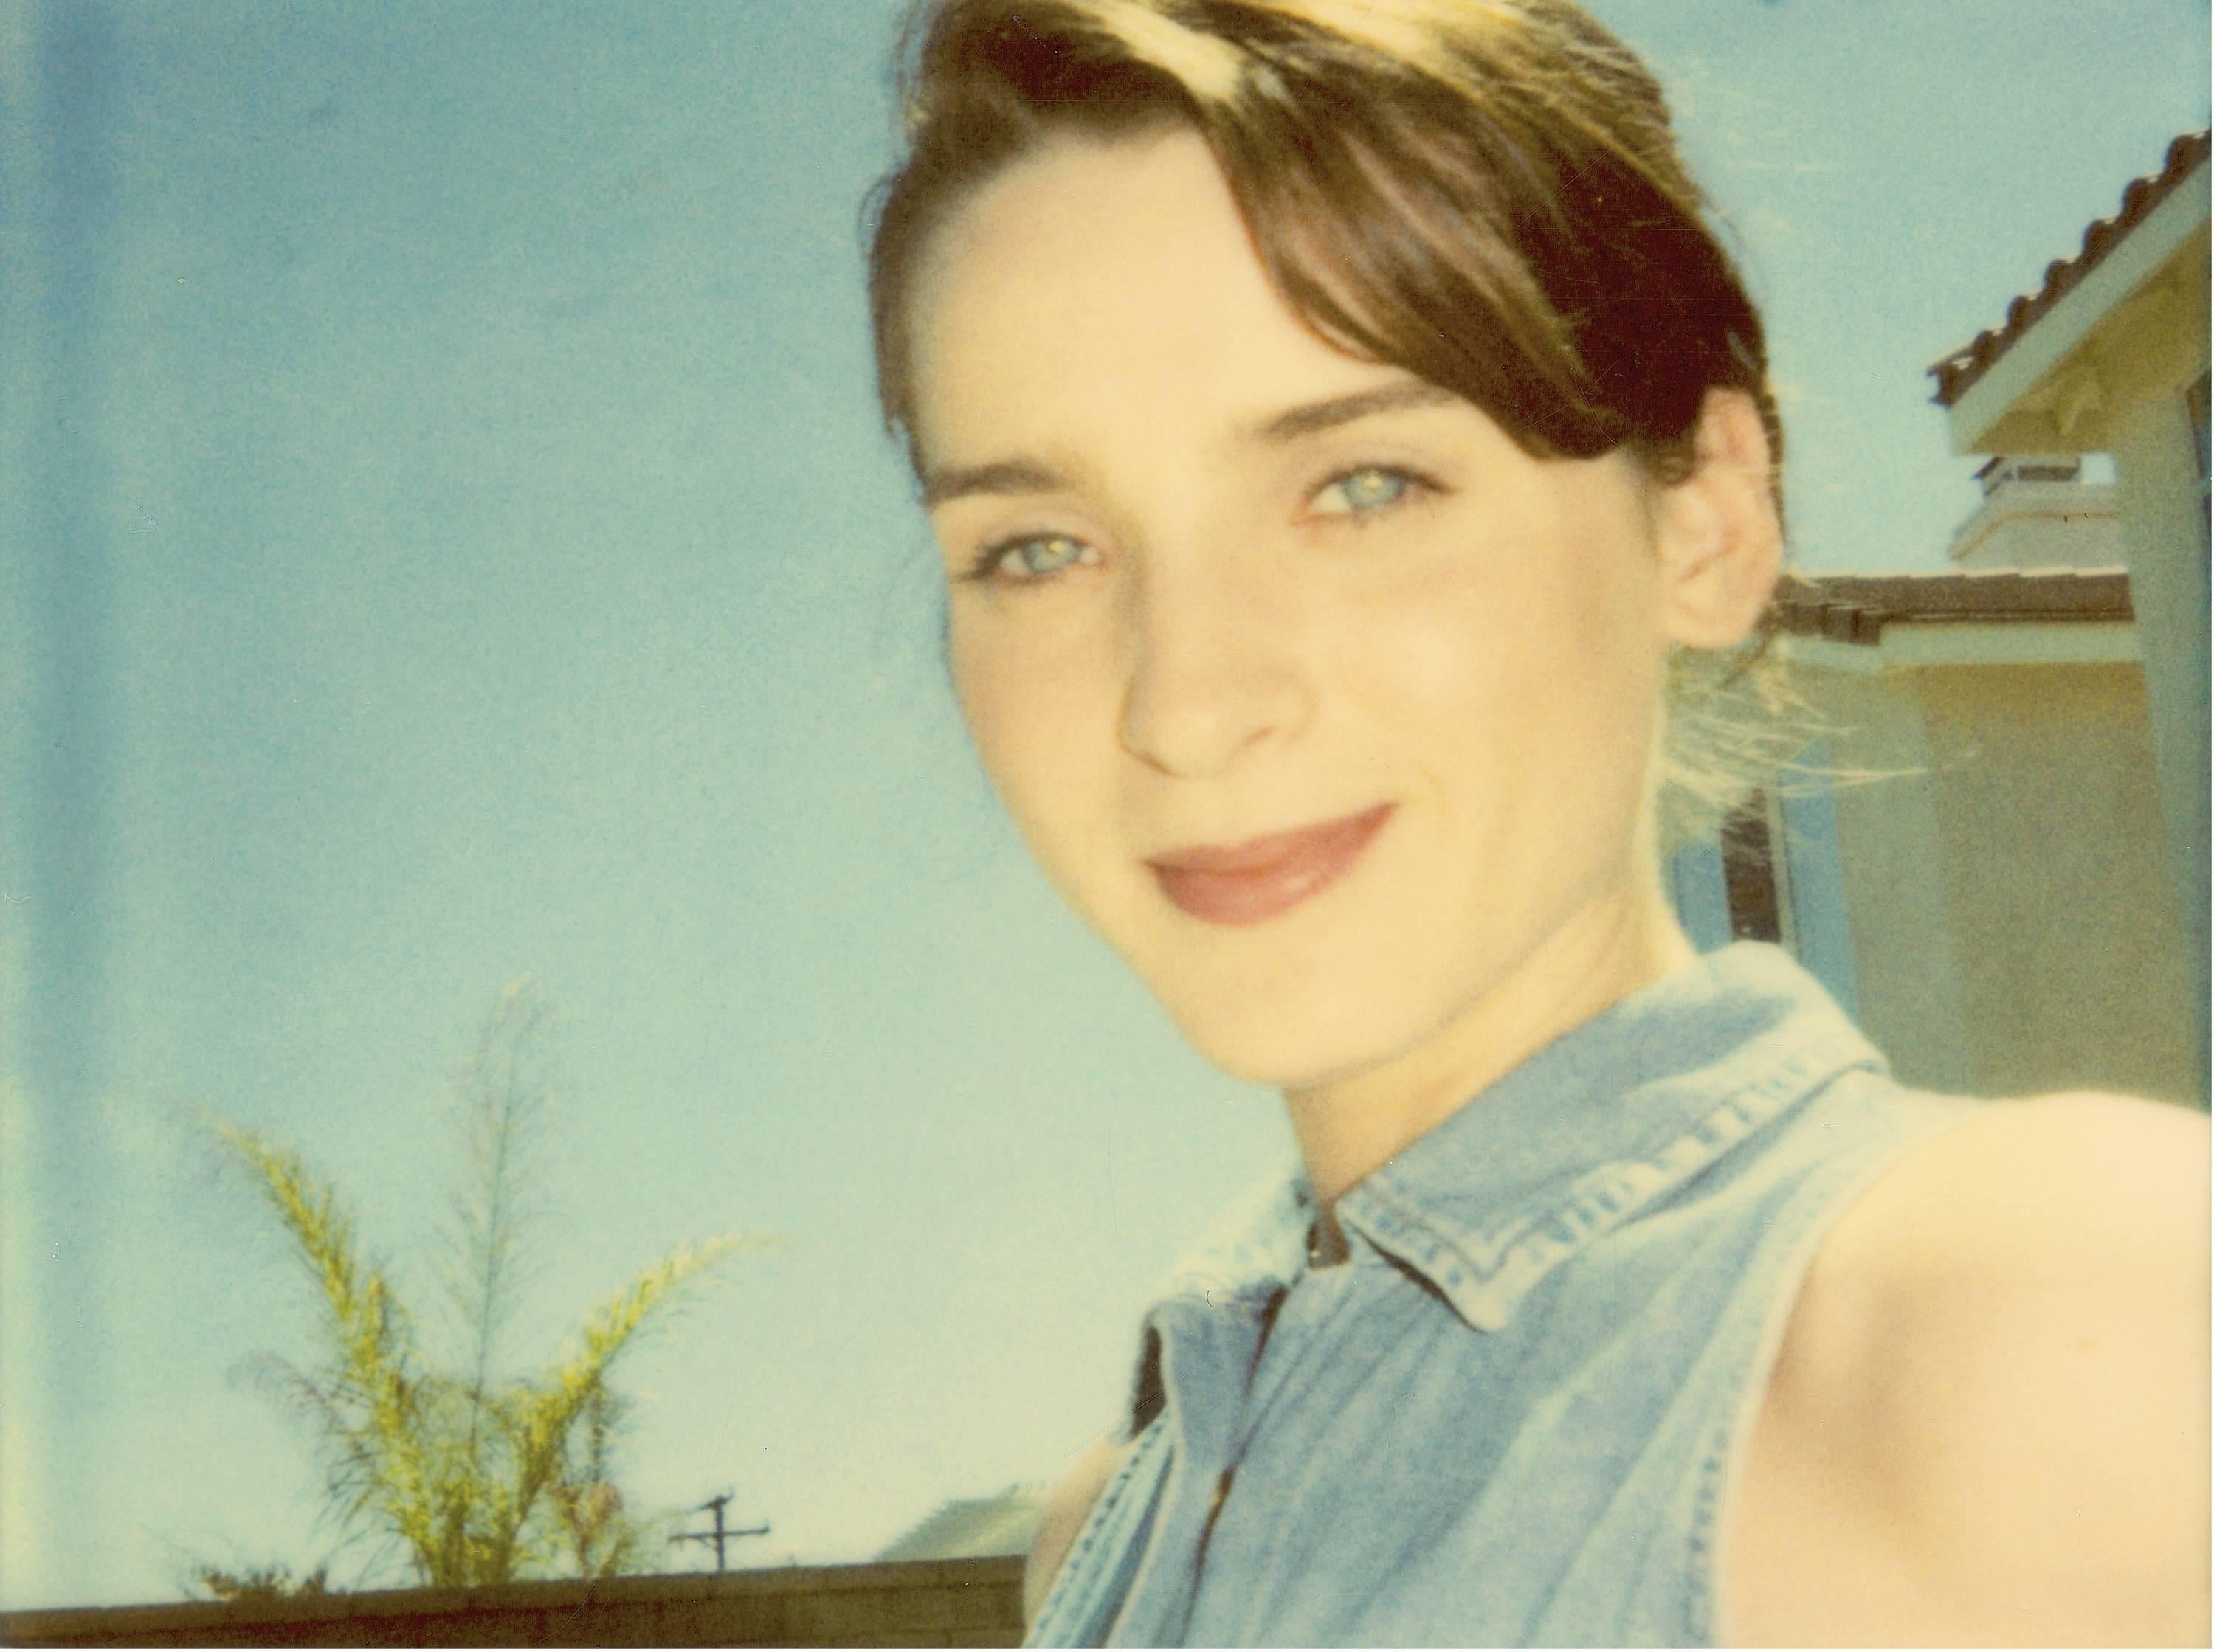 Stefanie Schneider Portrait Photograph - April blue Eyes (Suburbia) - mounted on Aluminum with shadow frame, analog